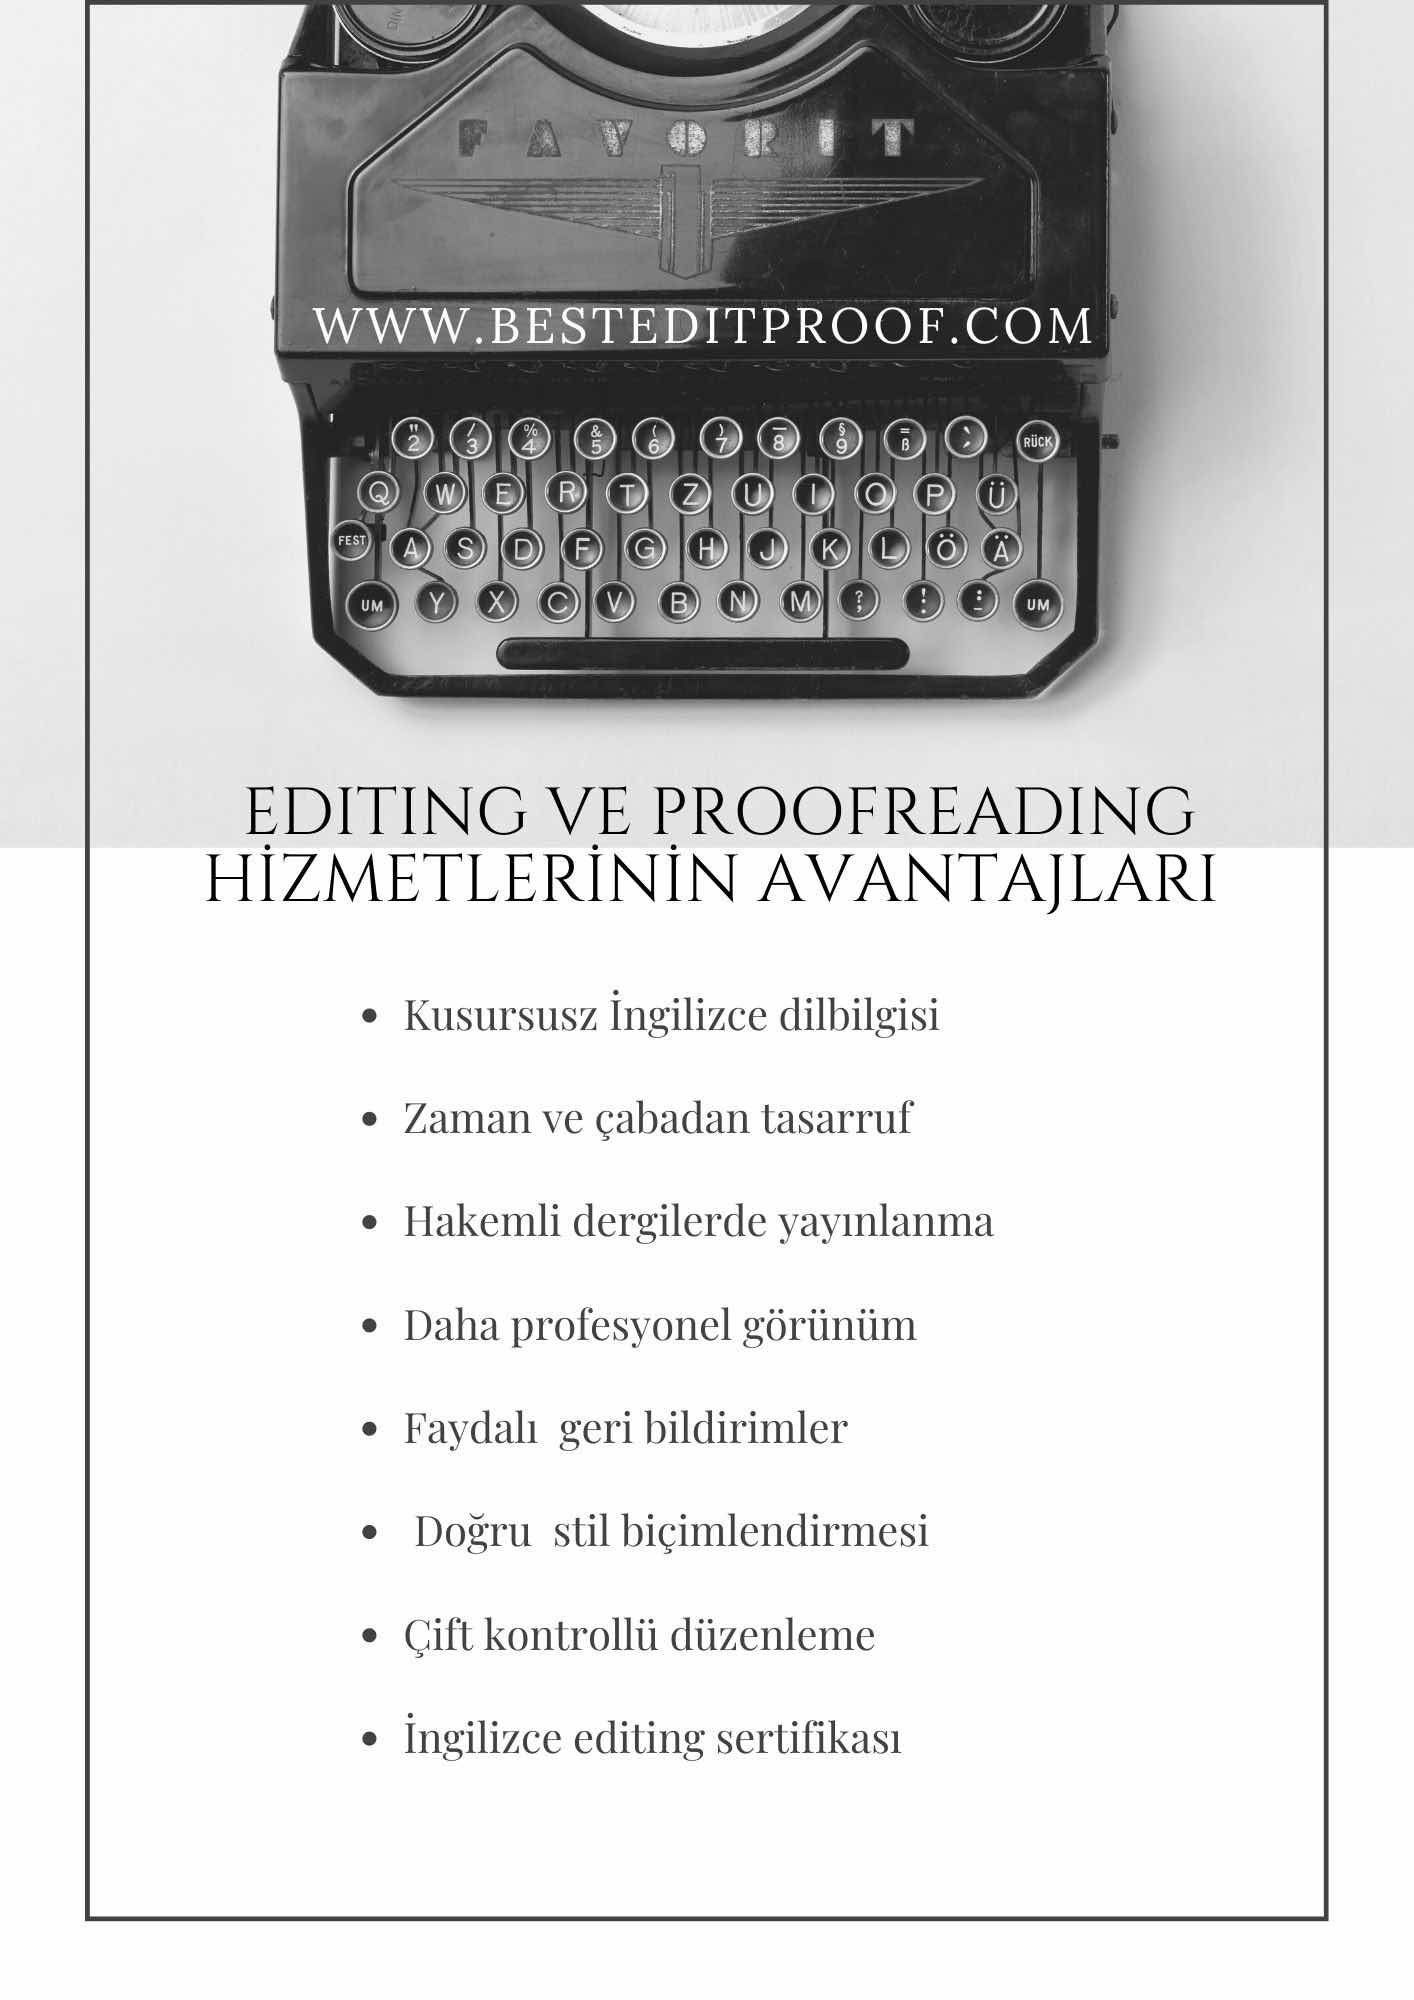 İngilizce editing proofreading hizmetlerinin faydaları